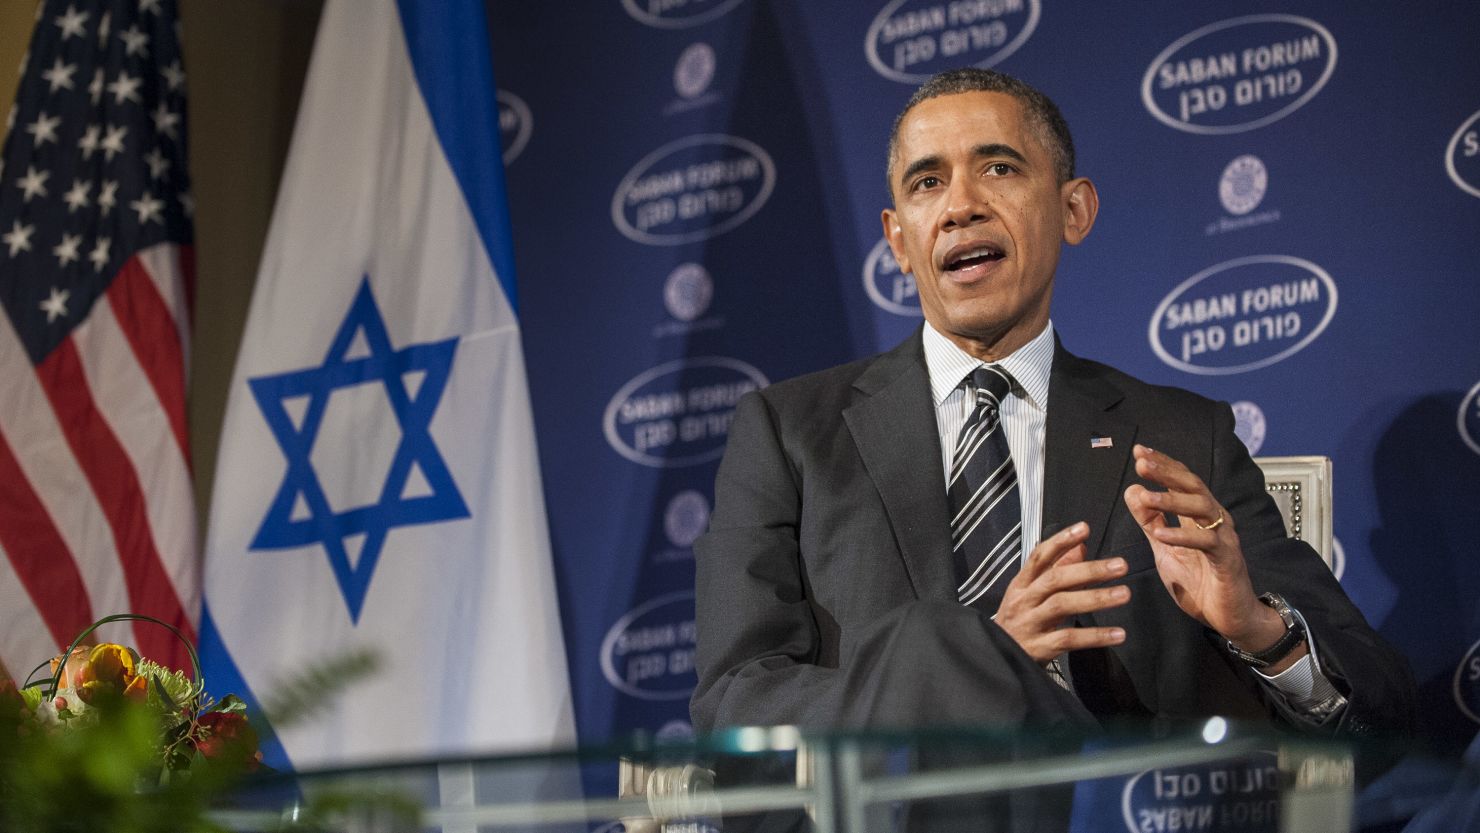 U.S. President Barack Obama at the Saban Forum at the Willard Hotel on December 7, 2013 in Washington, DC.